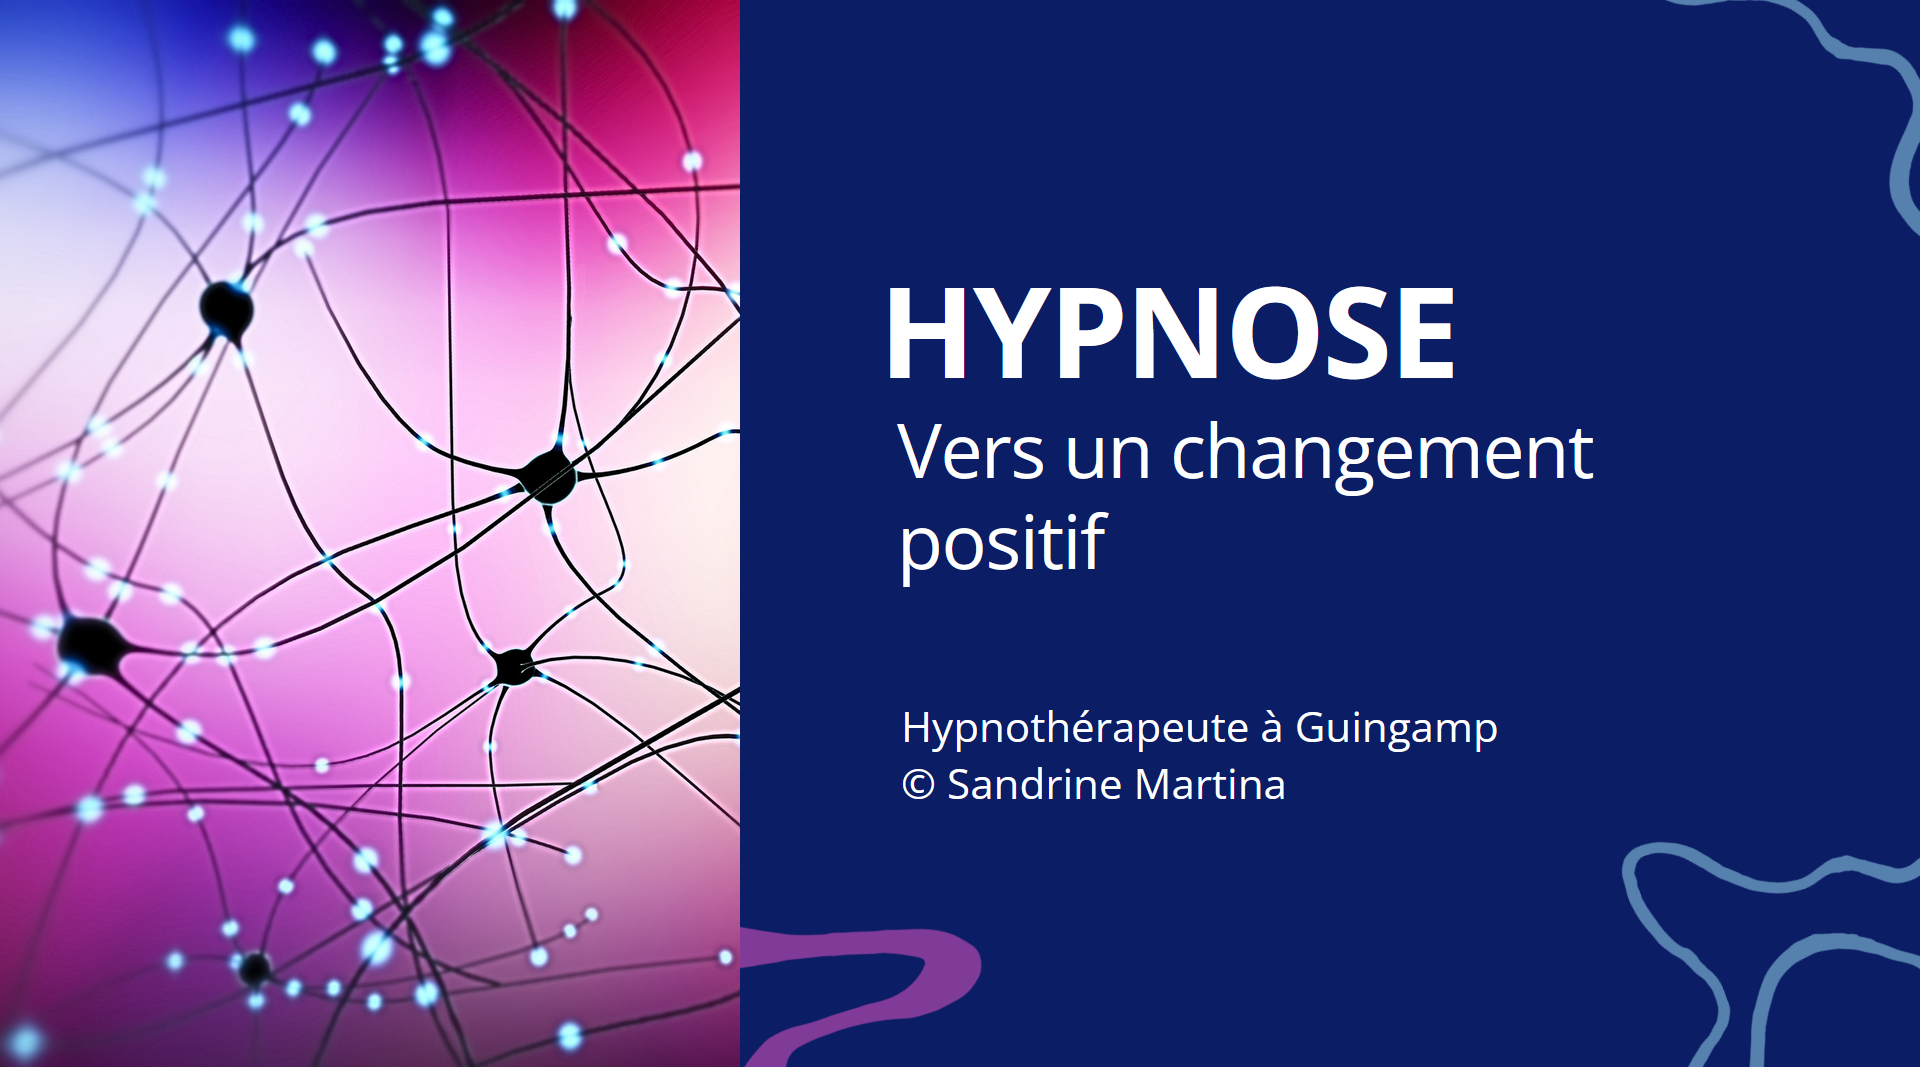 Hypnotiseur guingamp sandrine martina hypnose anxiete hypnose confiance vers le changement positif 10